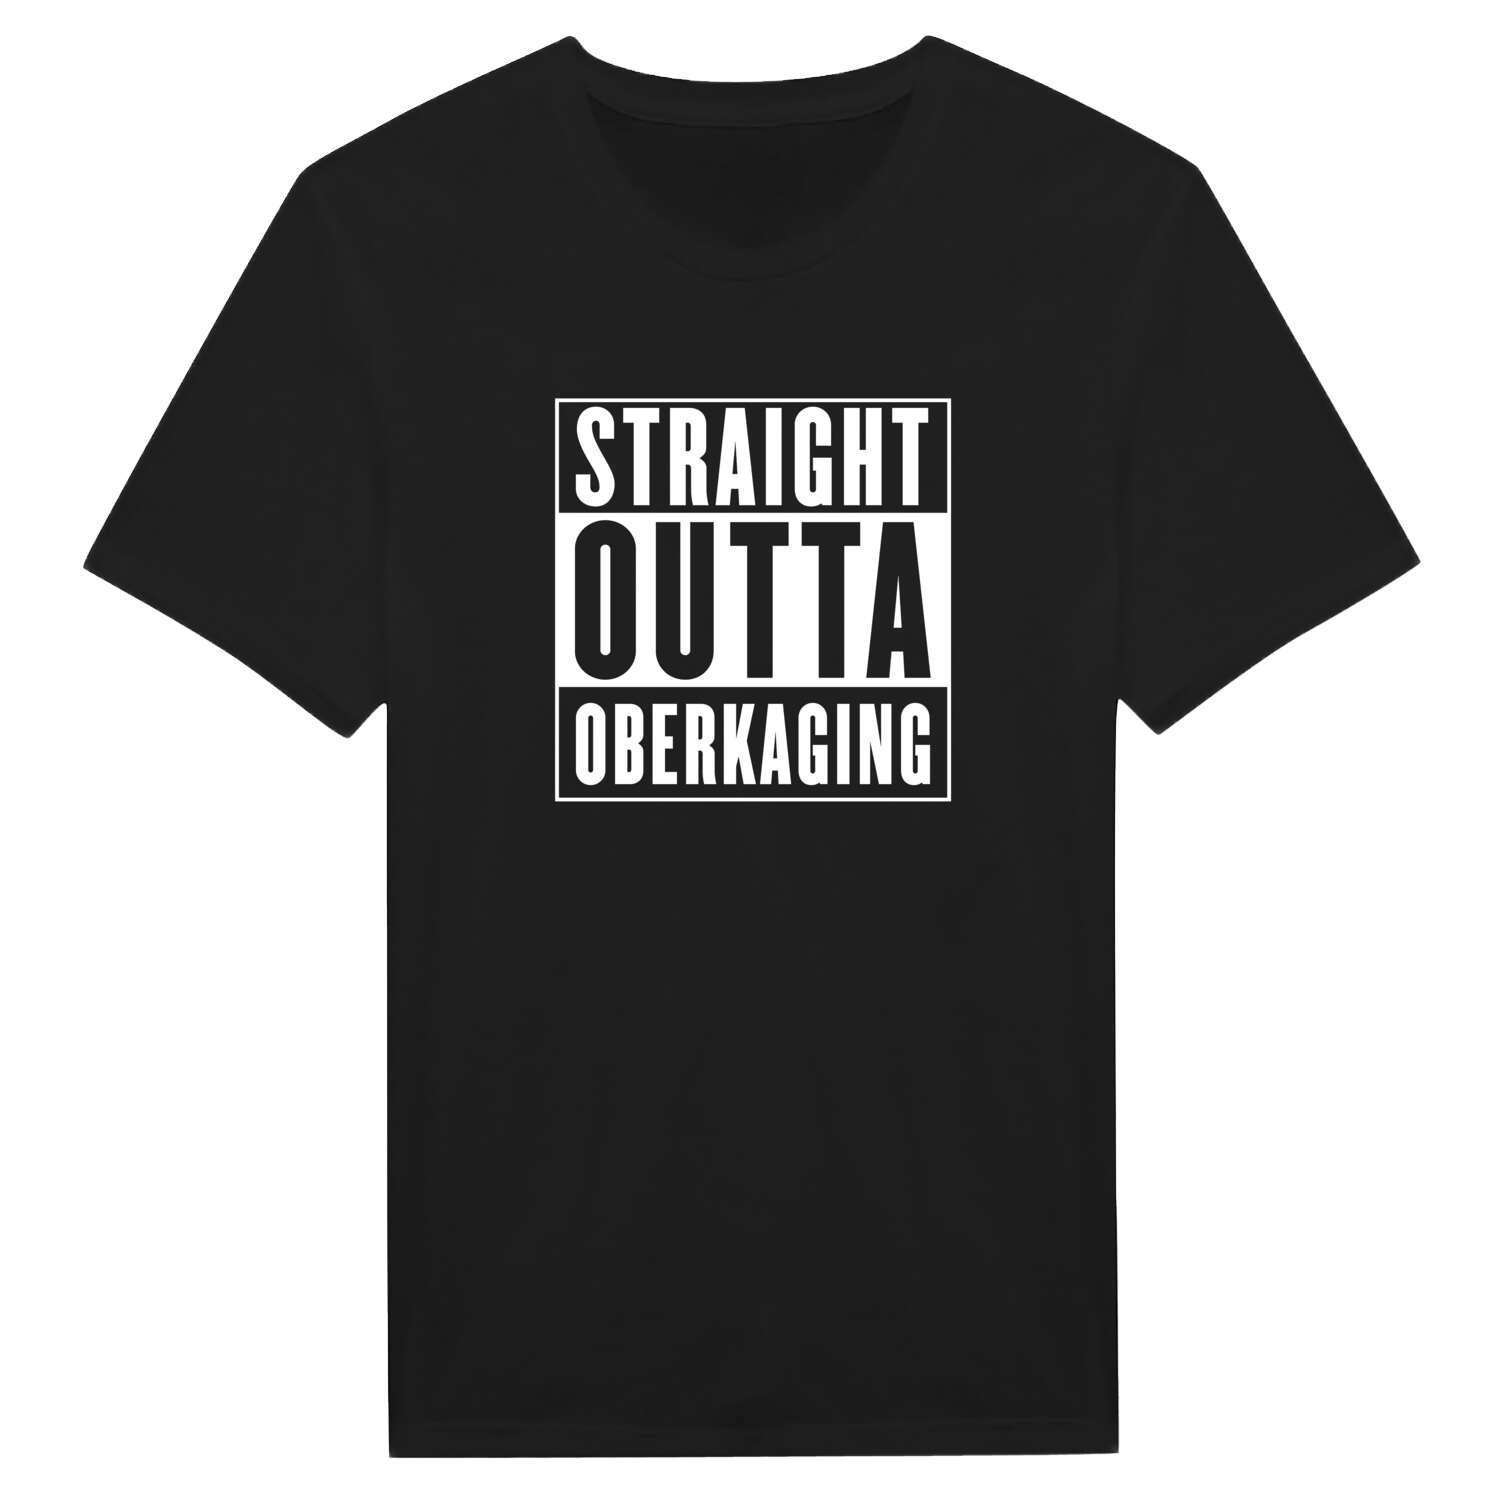 Oberkaging T-Shirt »Straight Outta«